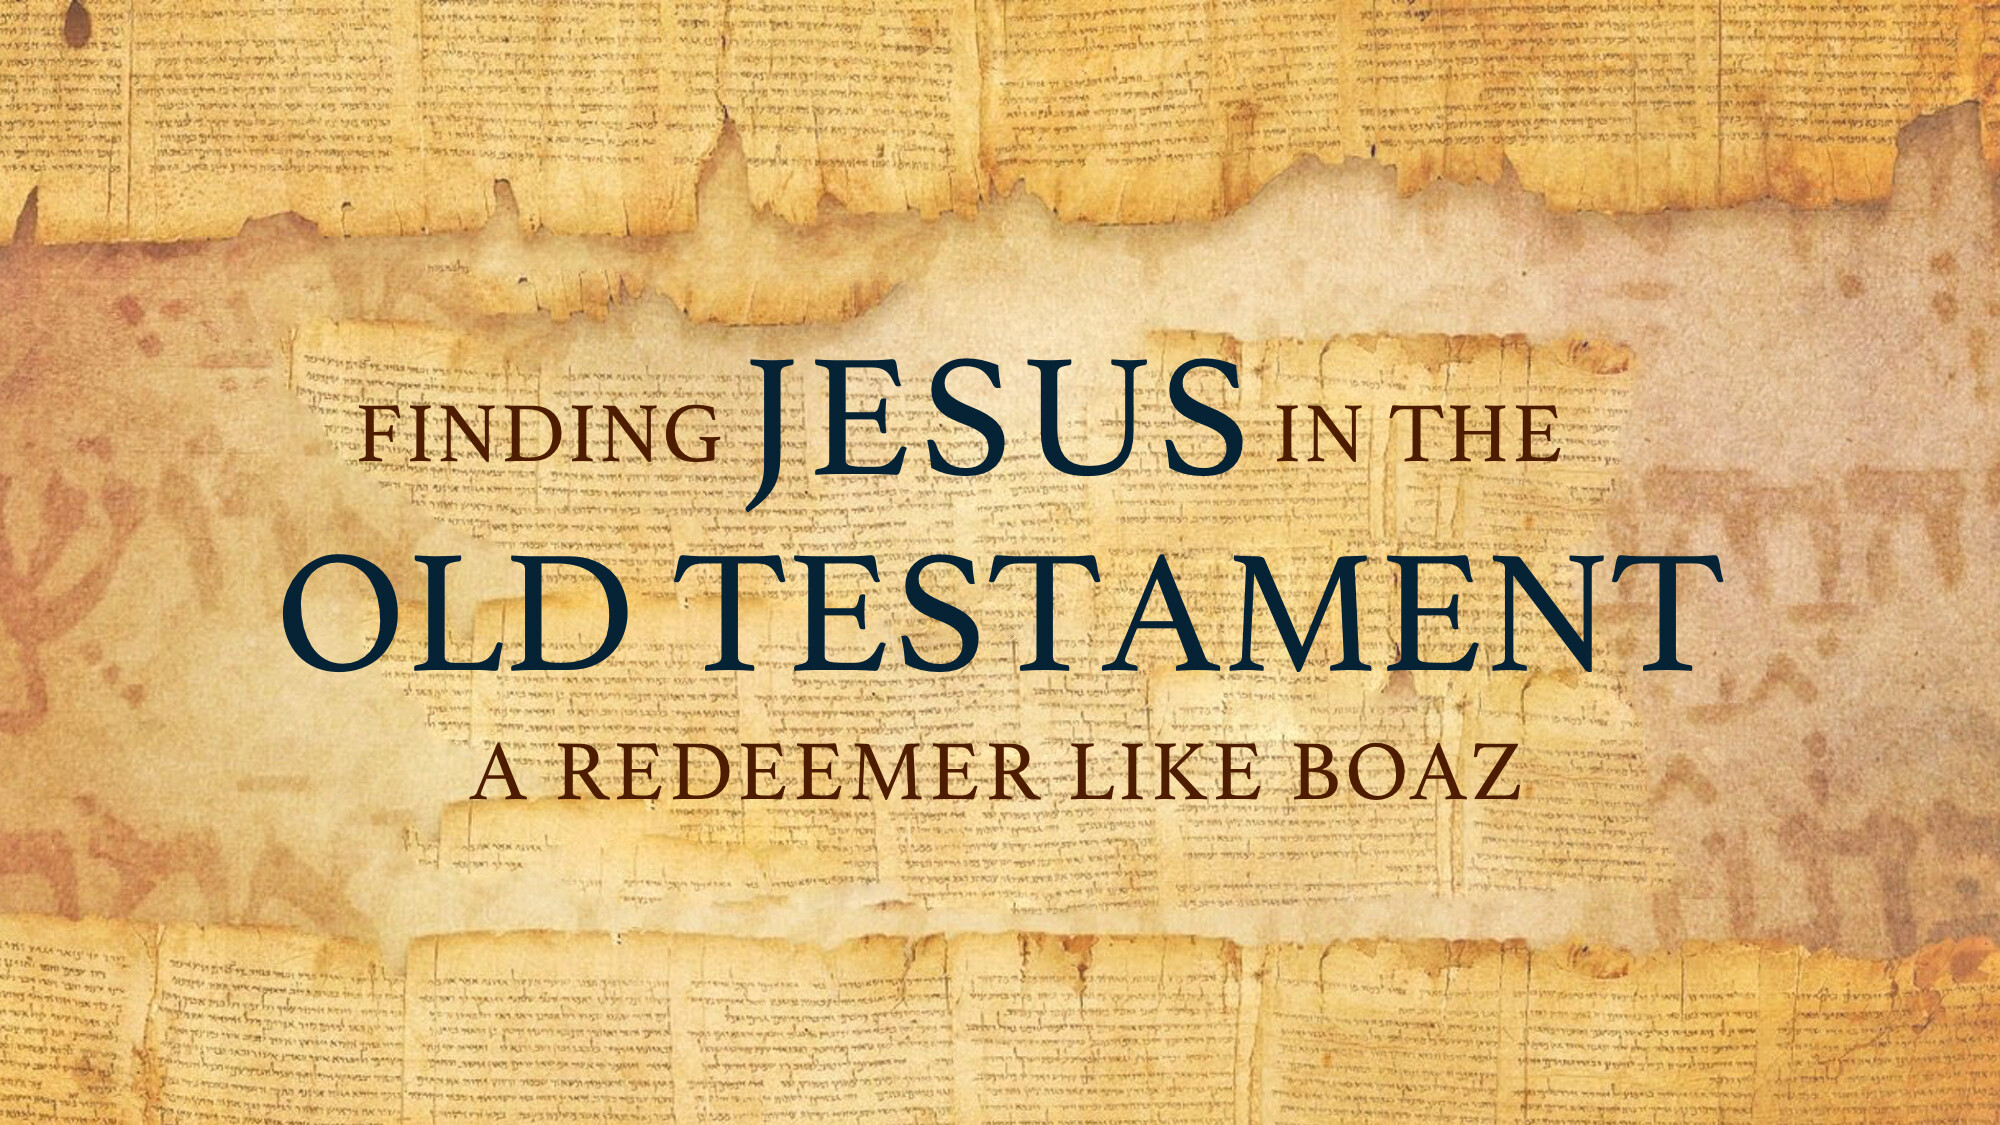 A Redeemer Like Boaz